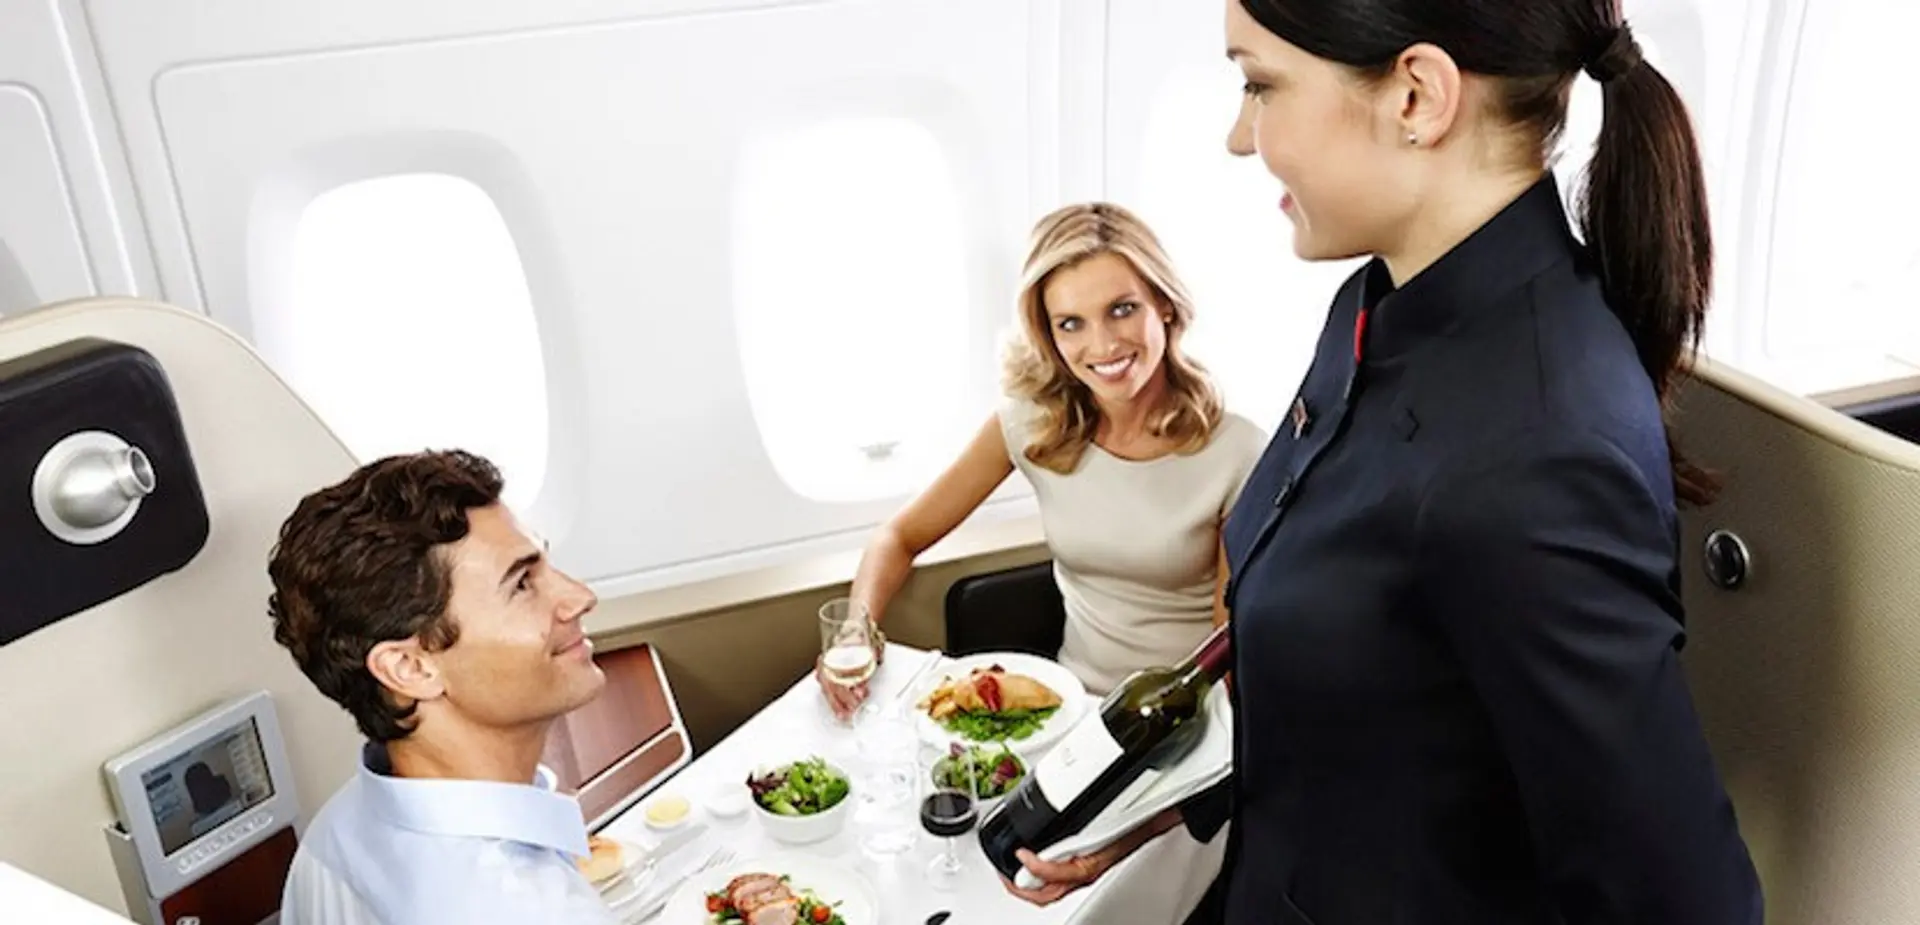 qantas-airlines-wine-tasting-featured.jpg